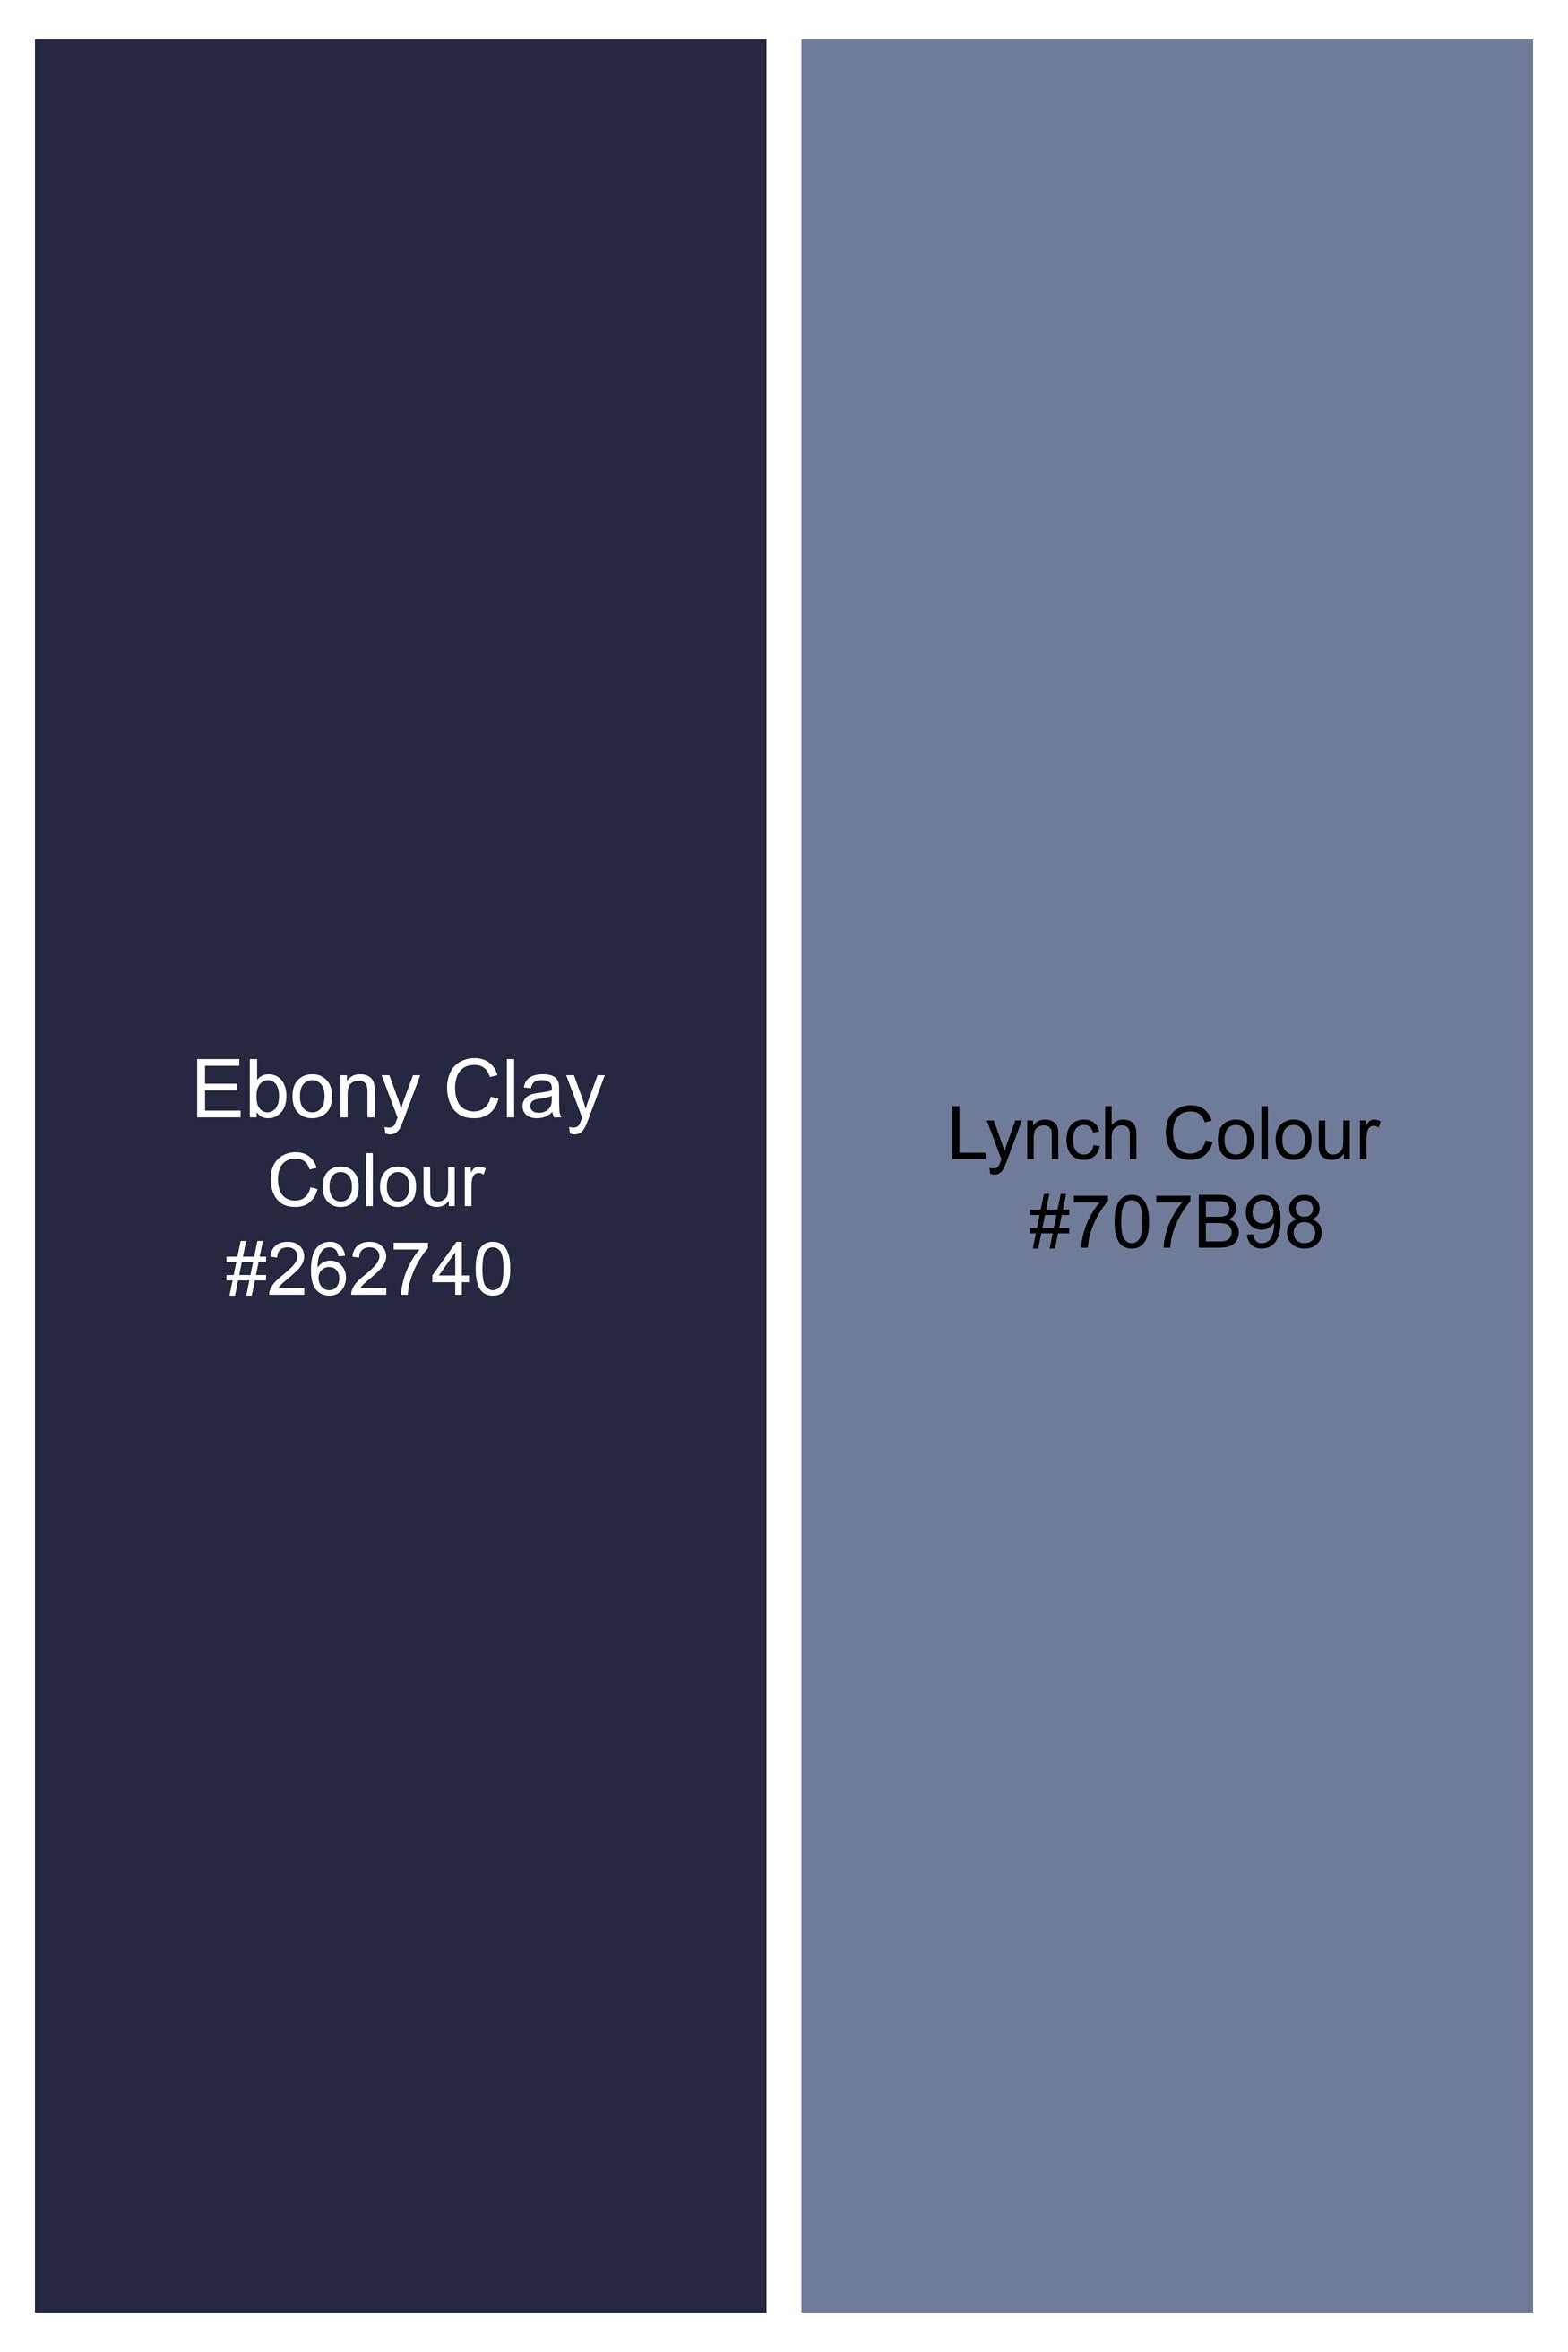 Ebony Clay Blue and Lynch Gray Striped Royal Oxford Shirt 11664-BLE-38, 11664-BLE-H-38, 11664-BLE-39, 11664-BLE-H-39, 11664-BLE-40, 11664-BLE-H-40, 11664-BLE-42, 11664-BLE-H-42, 11664-BLE-44, 11664-BLE-H-44, 11664-BLE-46, 11664-BLE-H-46, 11664-BLE-48, 11664-BLE-H-48, 11664-BLE-50, 11664-BLE-H-50, 11664-BLE-52, 11664-BLE-H-52